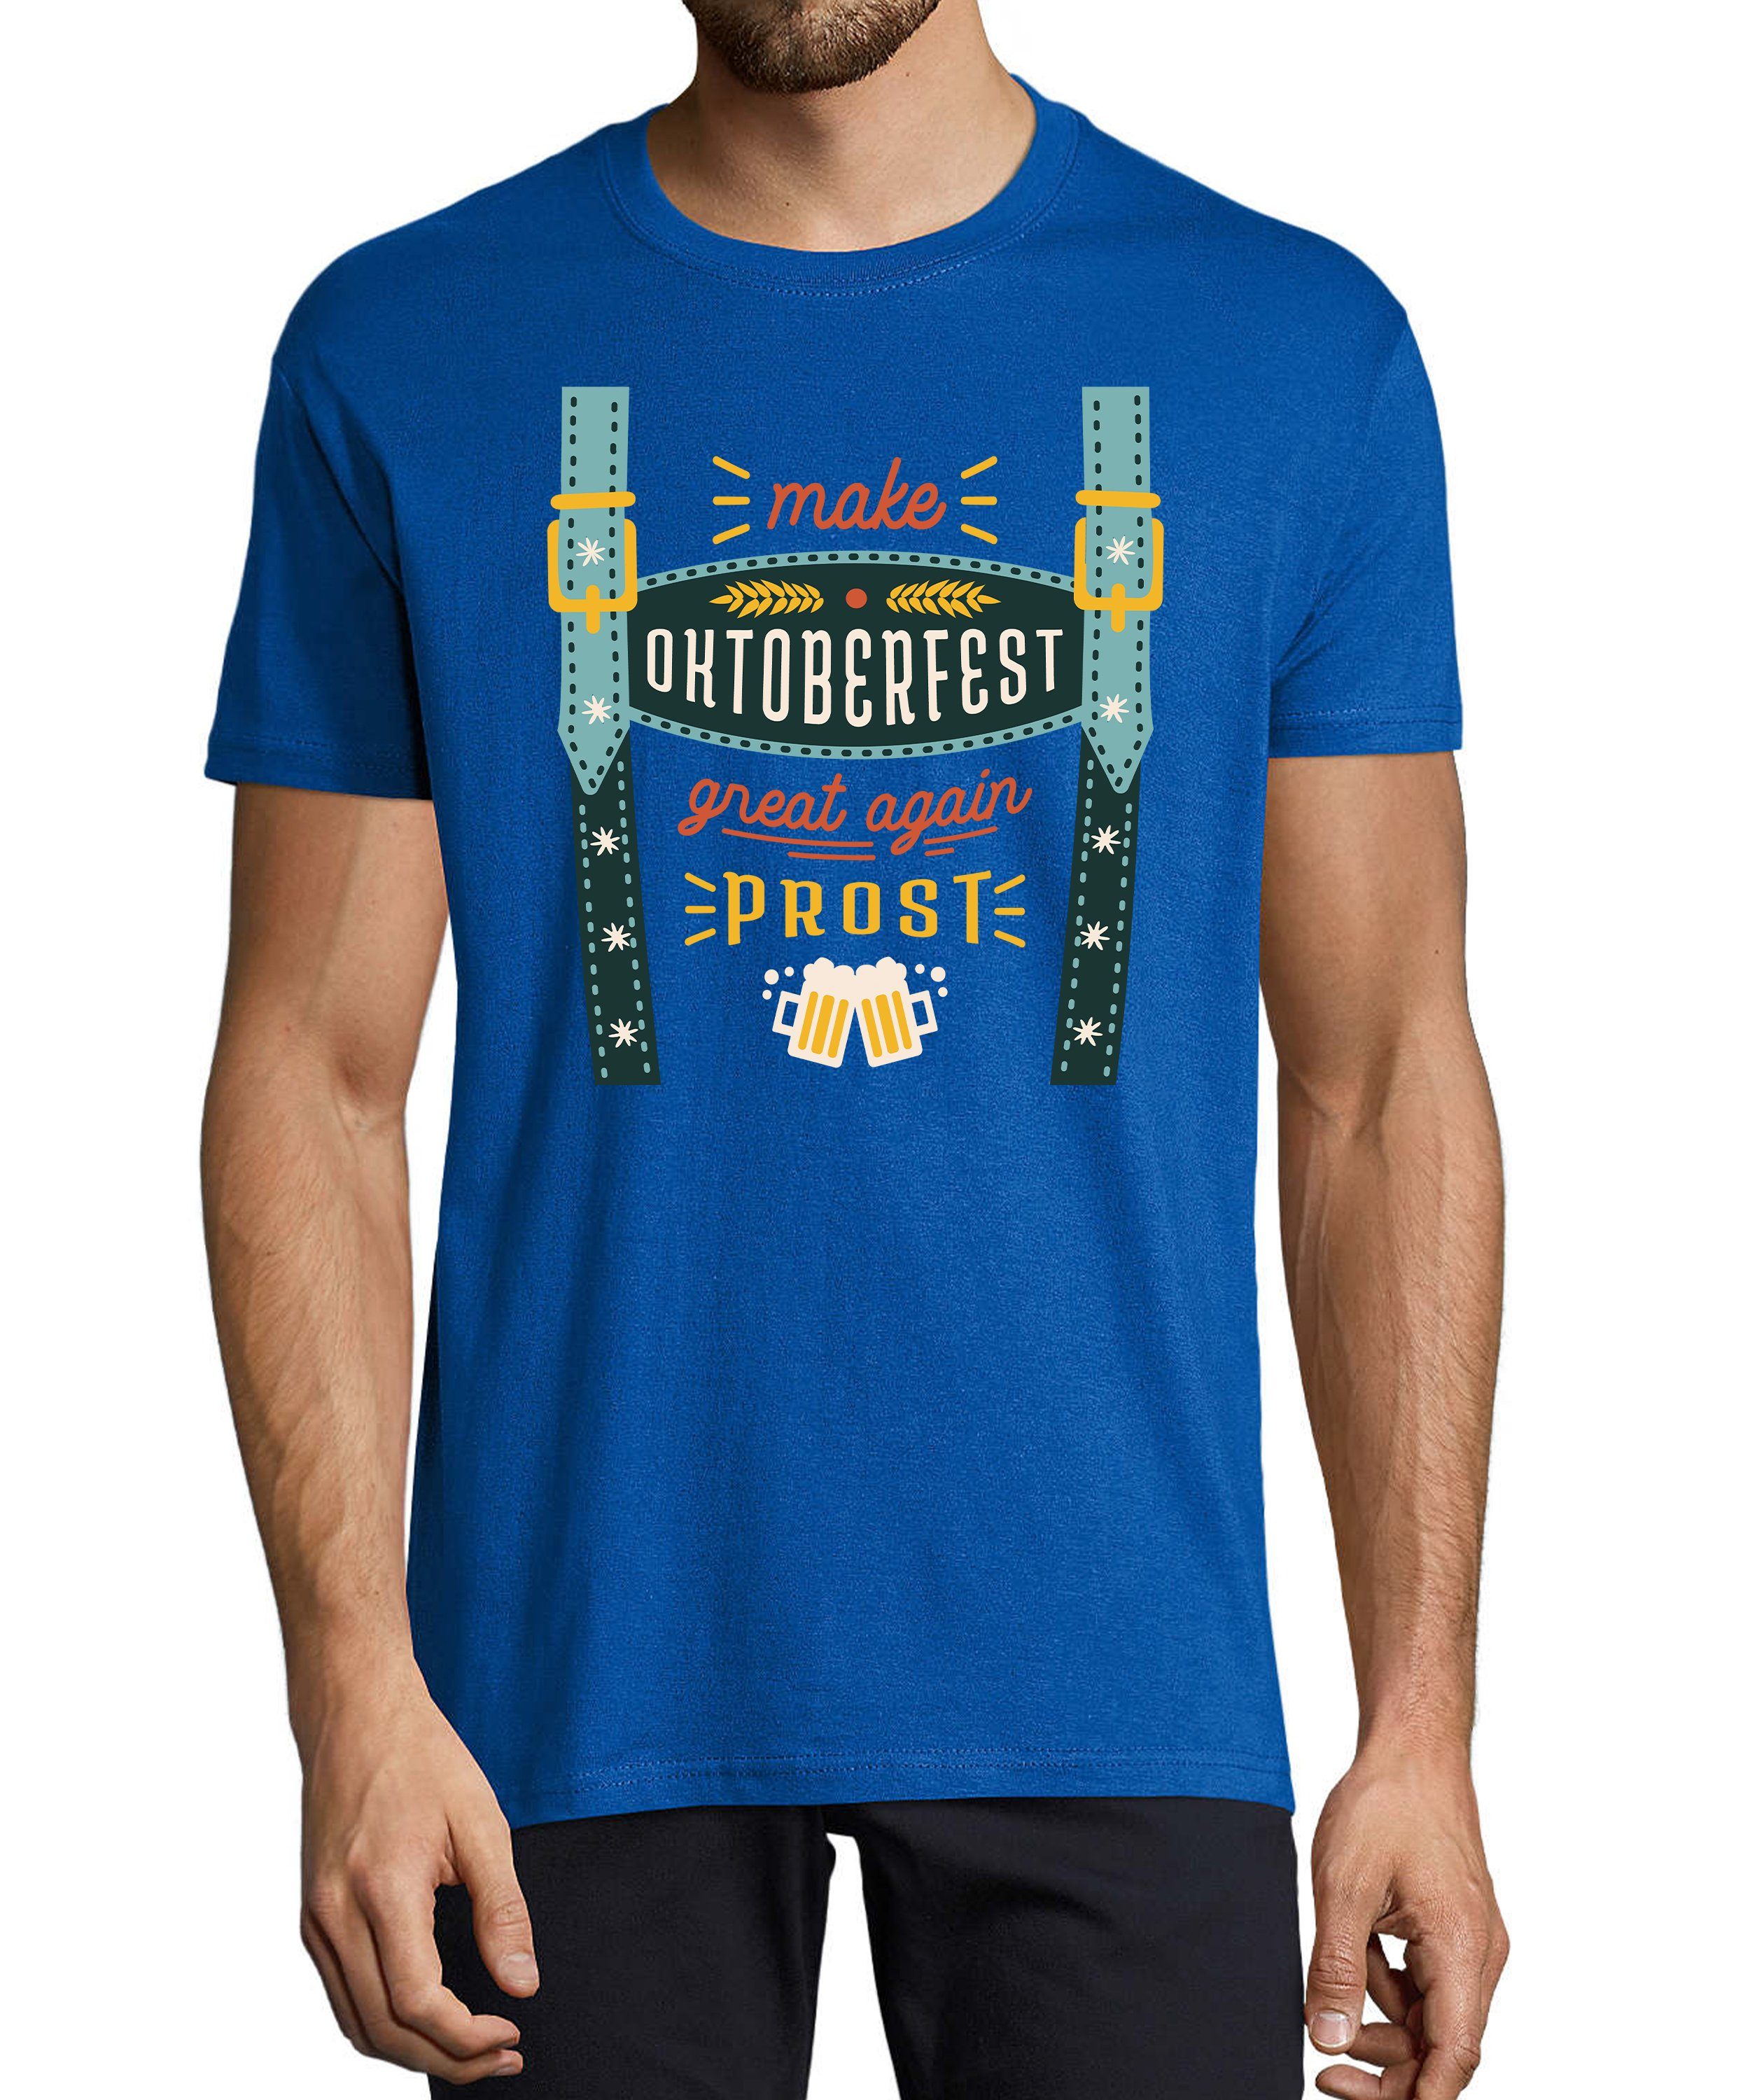 MyDesign24 T-Shirt Herren Fun Shirt - Trinkshirt Oktoberfest T-Shirt Hosenträger Print Baumwollshirt mit Aufdruck Regular Fit, i317 royal blau